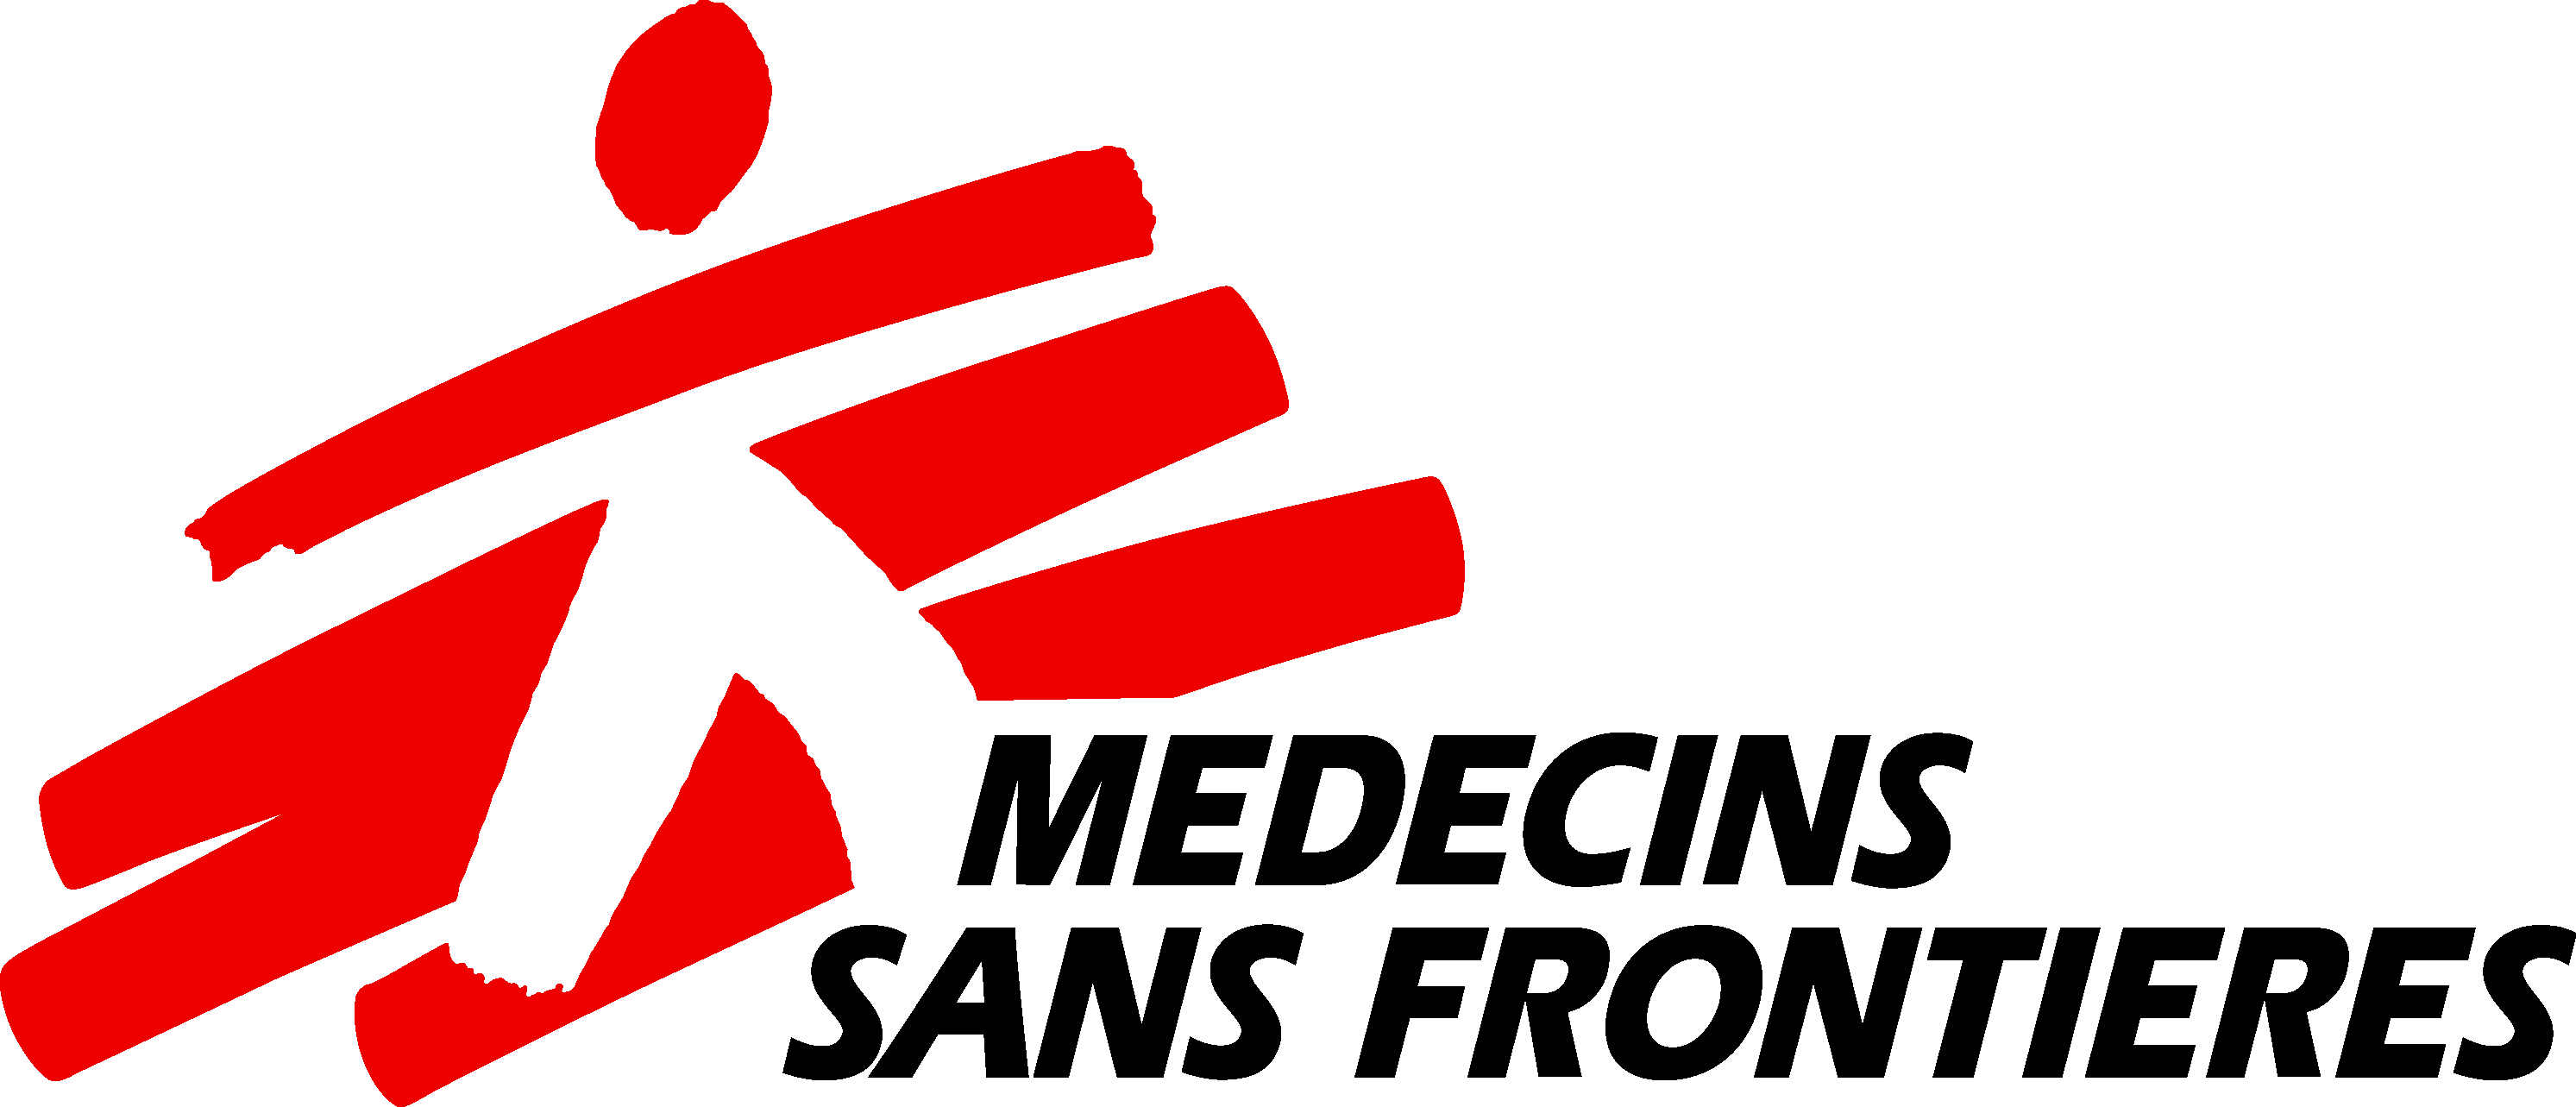 MSF Logo   Medecins Sans Frontieres Logo png